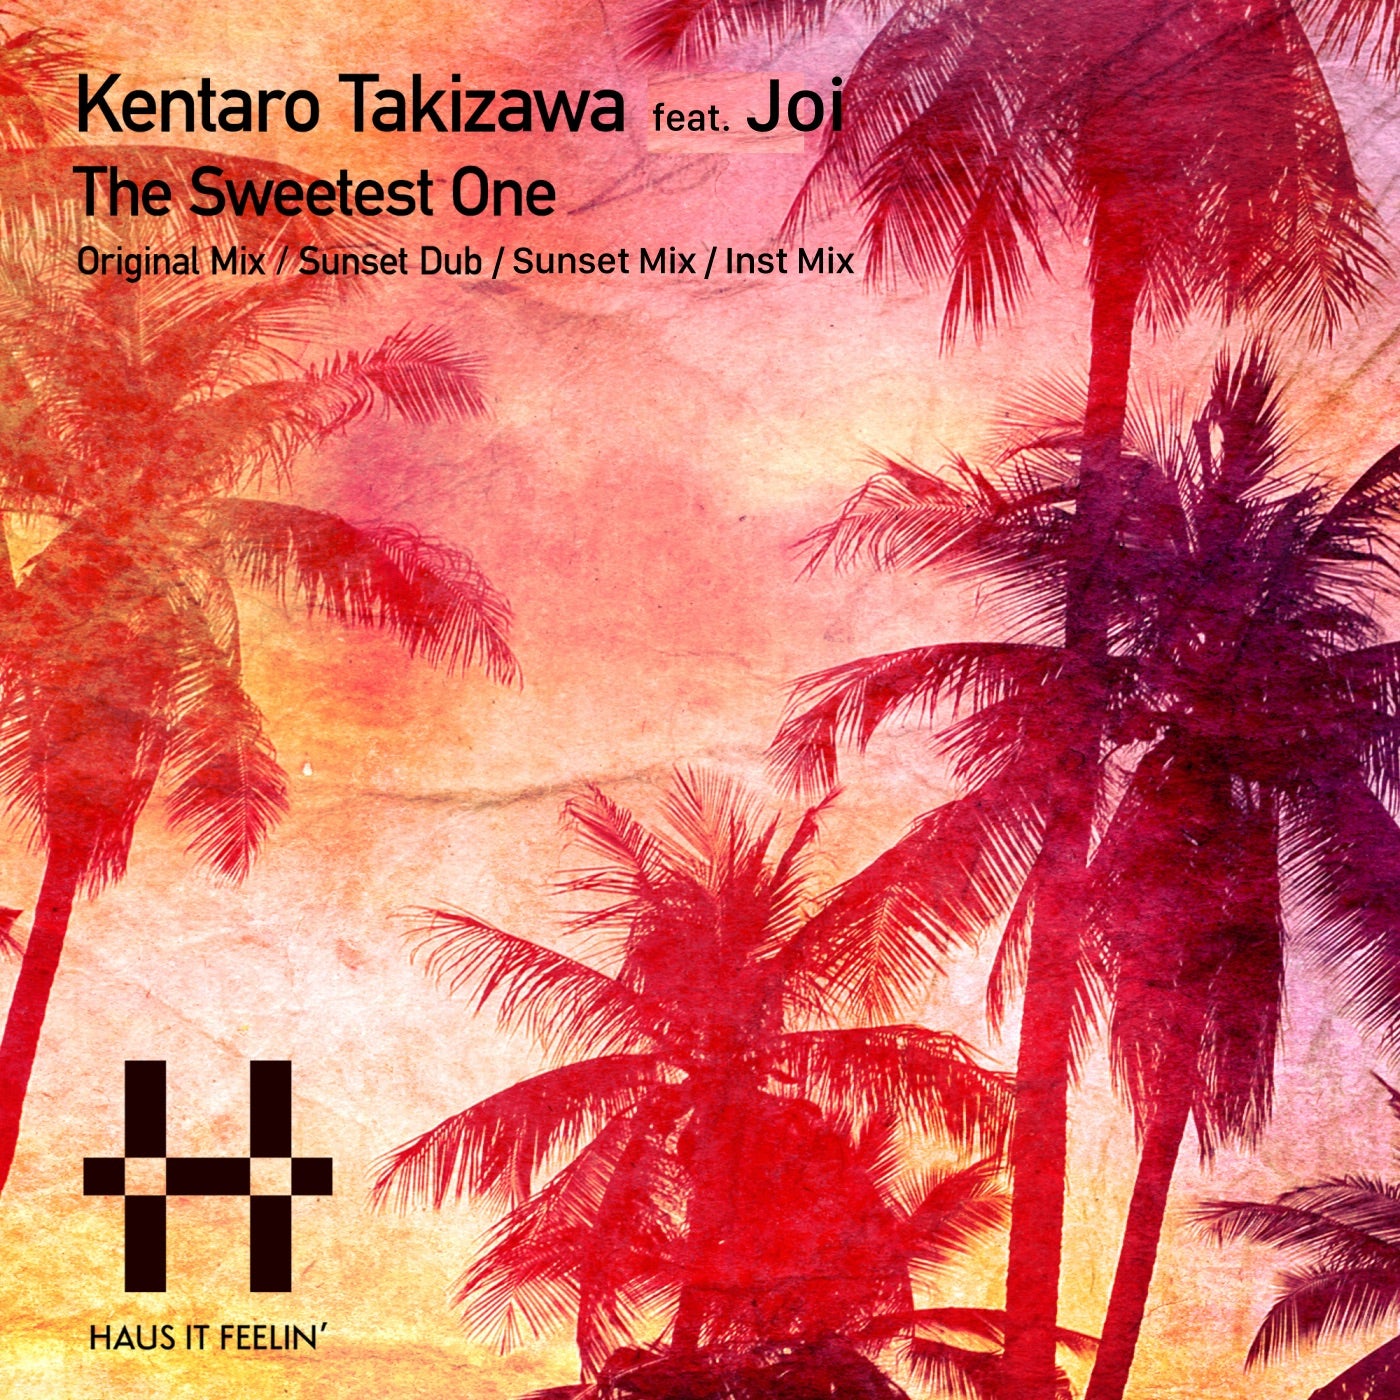 Kentaro Takizawa music download - Beatport